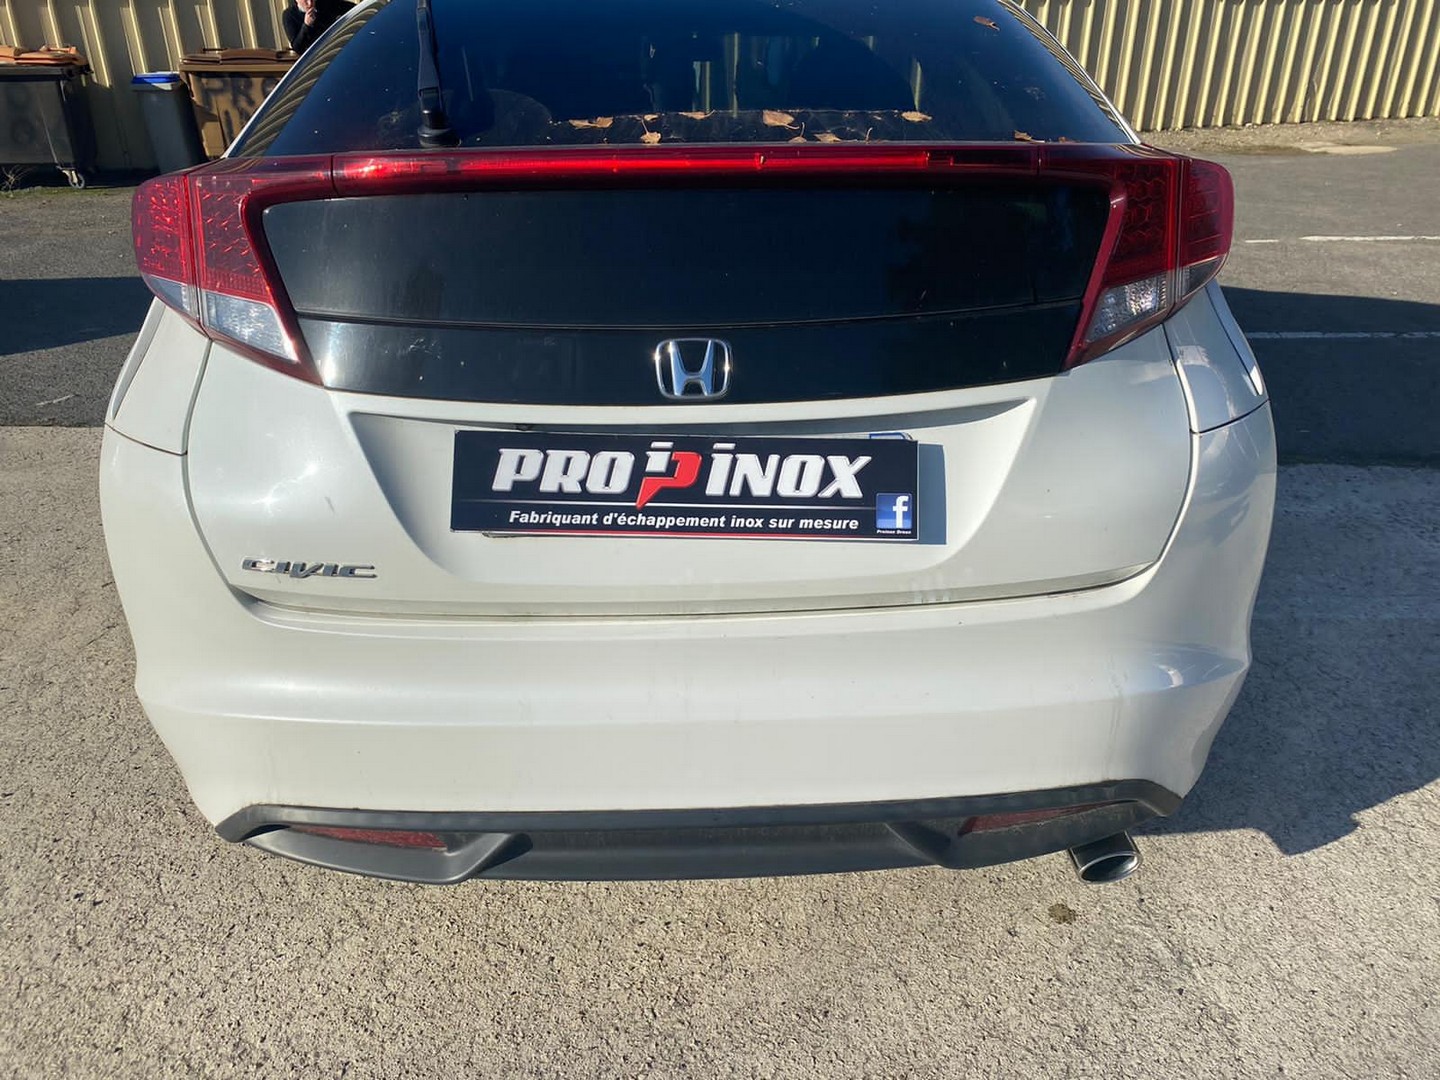 Proinox28 - Échappement inox Honda Civic 1.4l